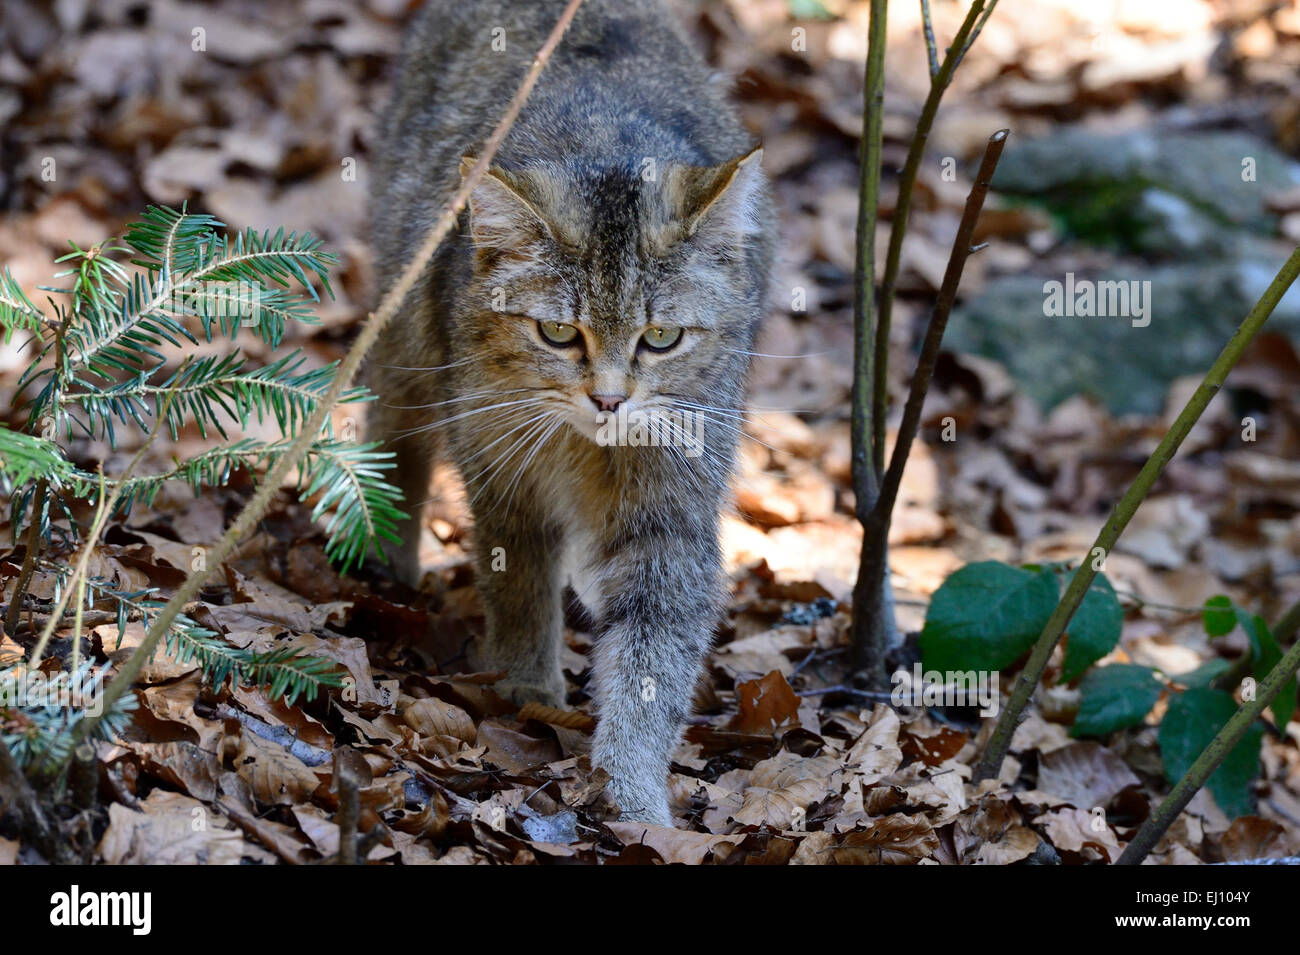 Wildcat, predator, small cats, cats, cat, wild cats, Felis silvestris, wildcats, predators, Germany, Stock Photo